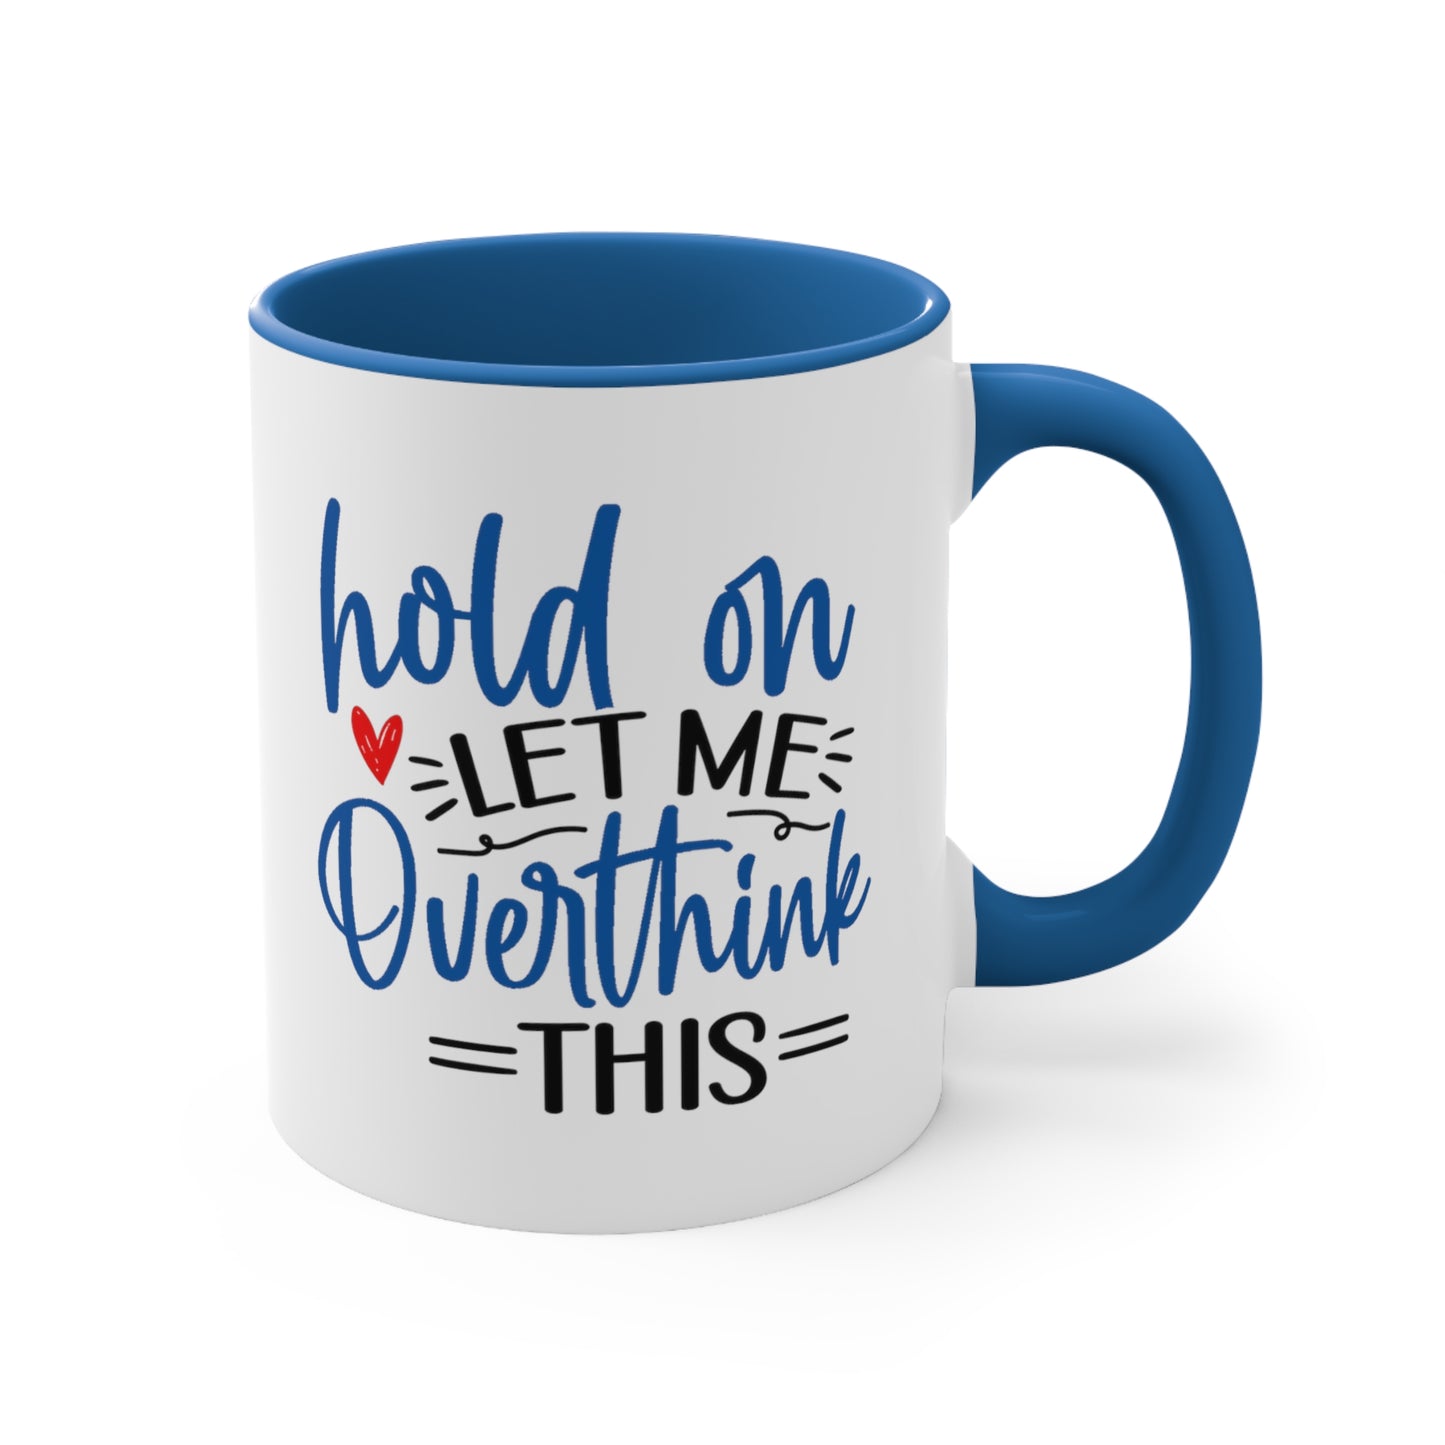 Hold On...Let Me Overthink This. 11oz Coffee Mug.